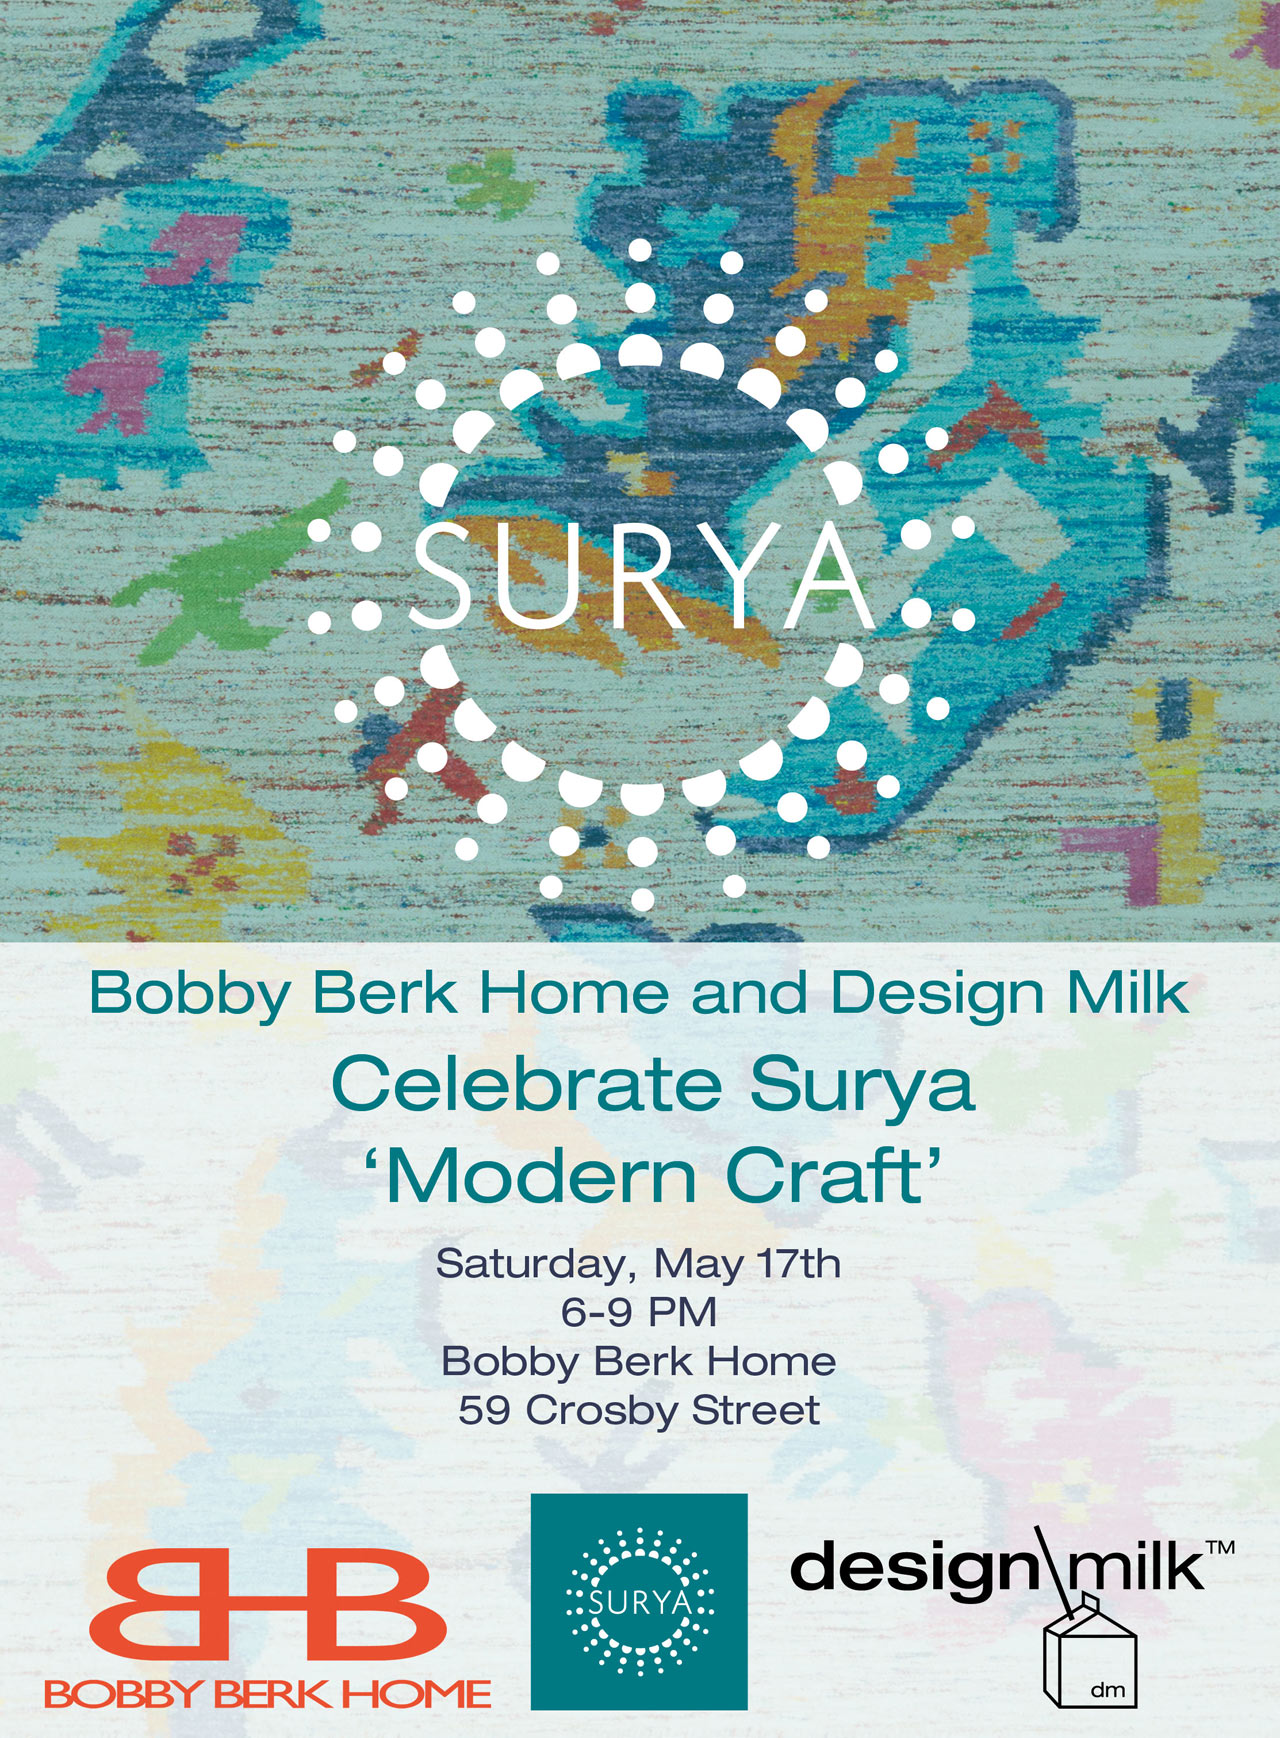 Celebrate Surya's 'Modern Craft' ICFF Debut with Bobby Berk Home